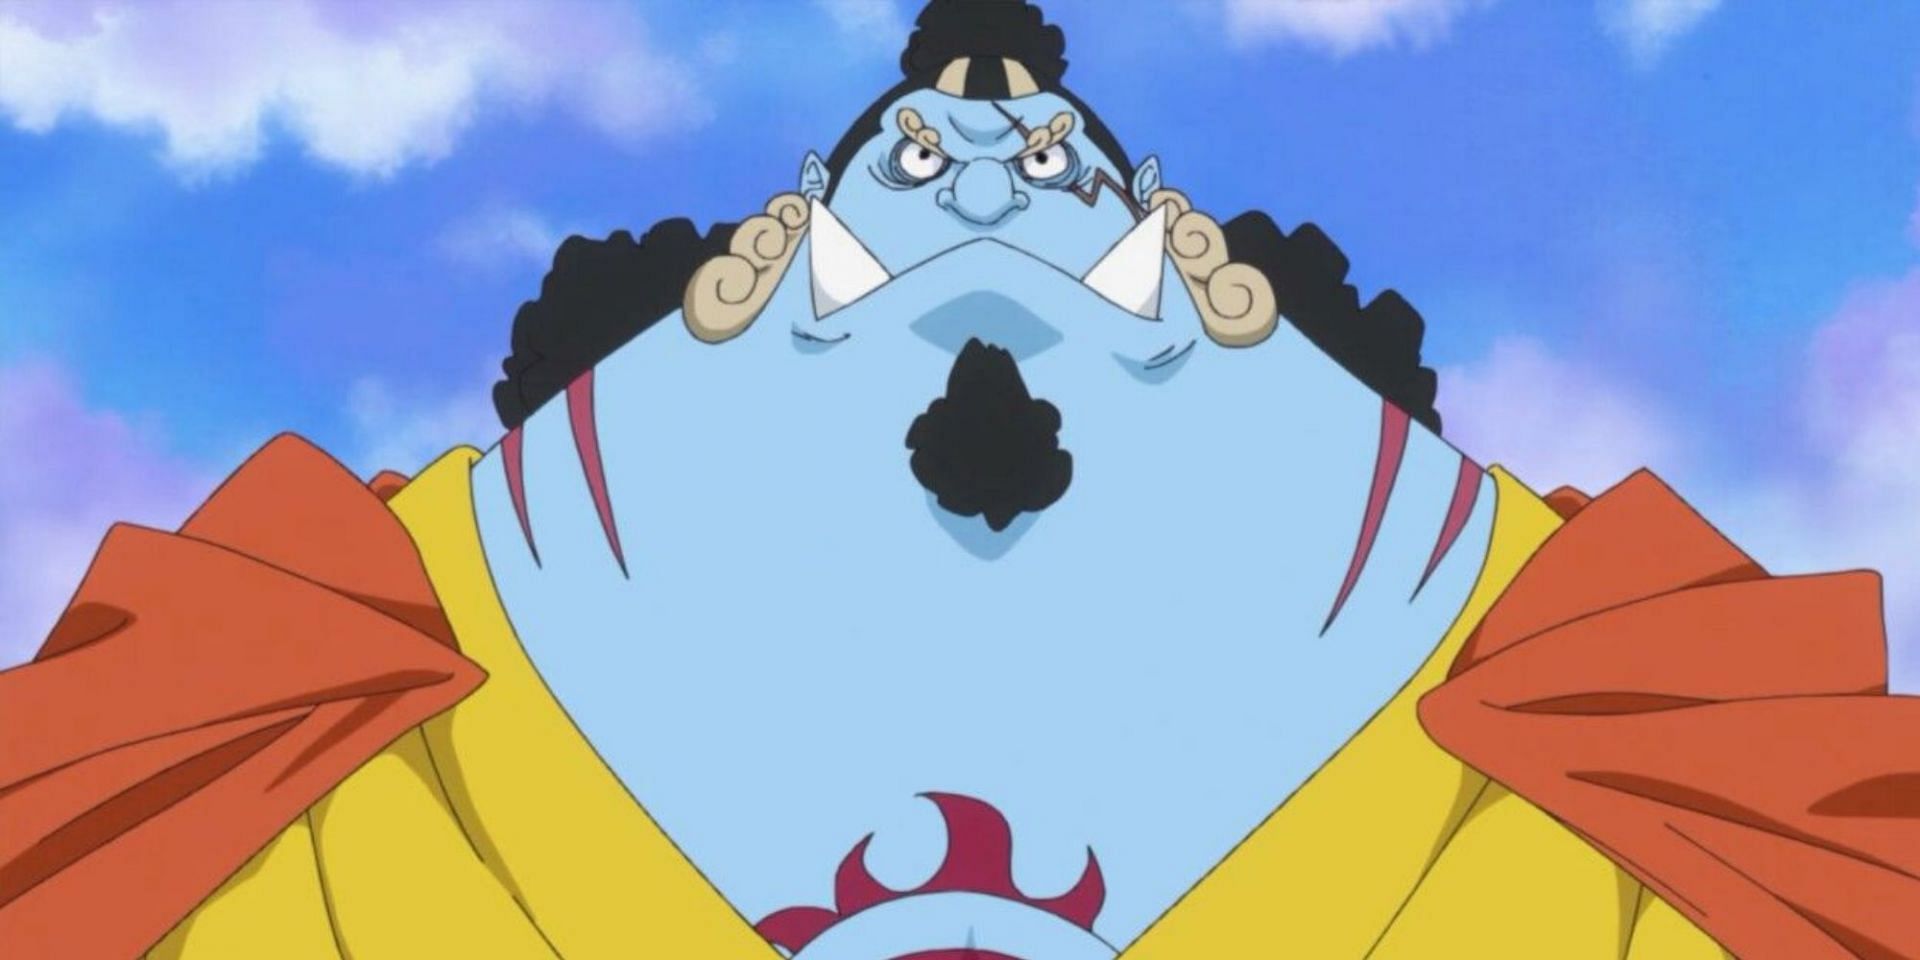 His name is sometimes spelled as Jinbei (Image Credits: Eiichiro Oda/Shueisha, Viz Media, One Piece)